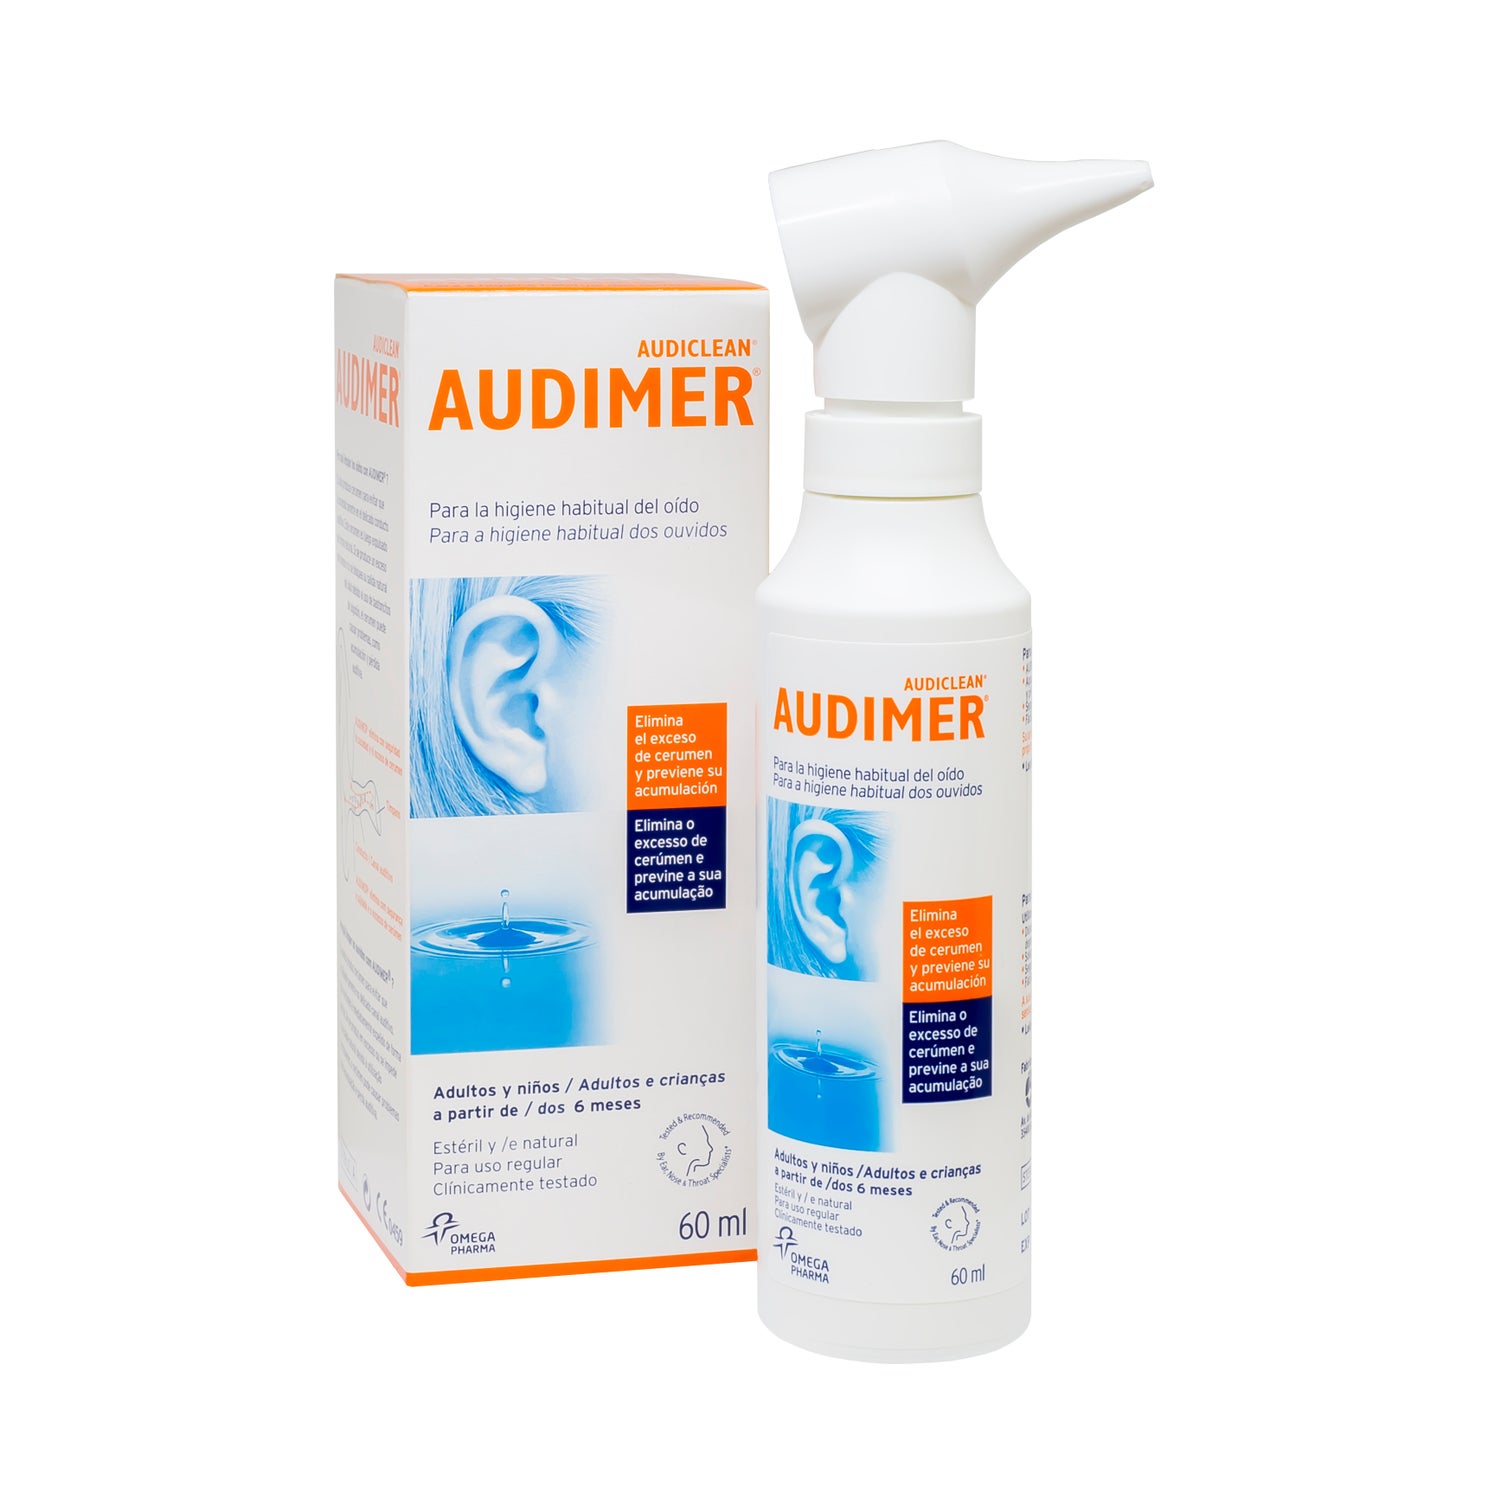 Audispray Adult Ear Hygiene 50ml – Better Health Today Malta